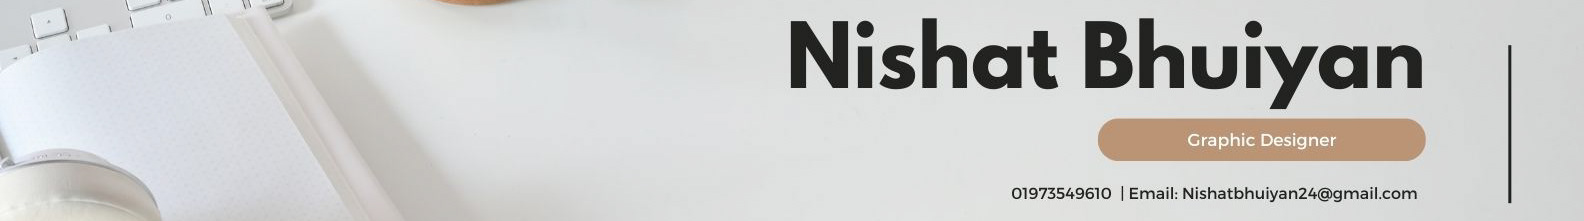 Nishat Bhuiyan's profile banner